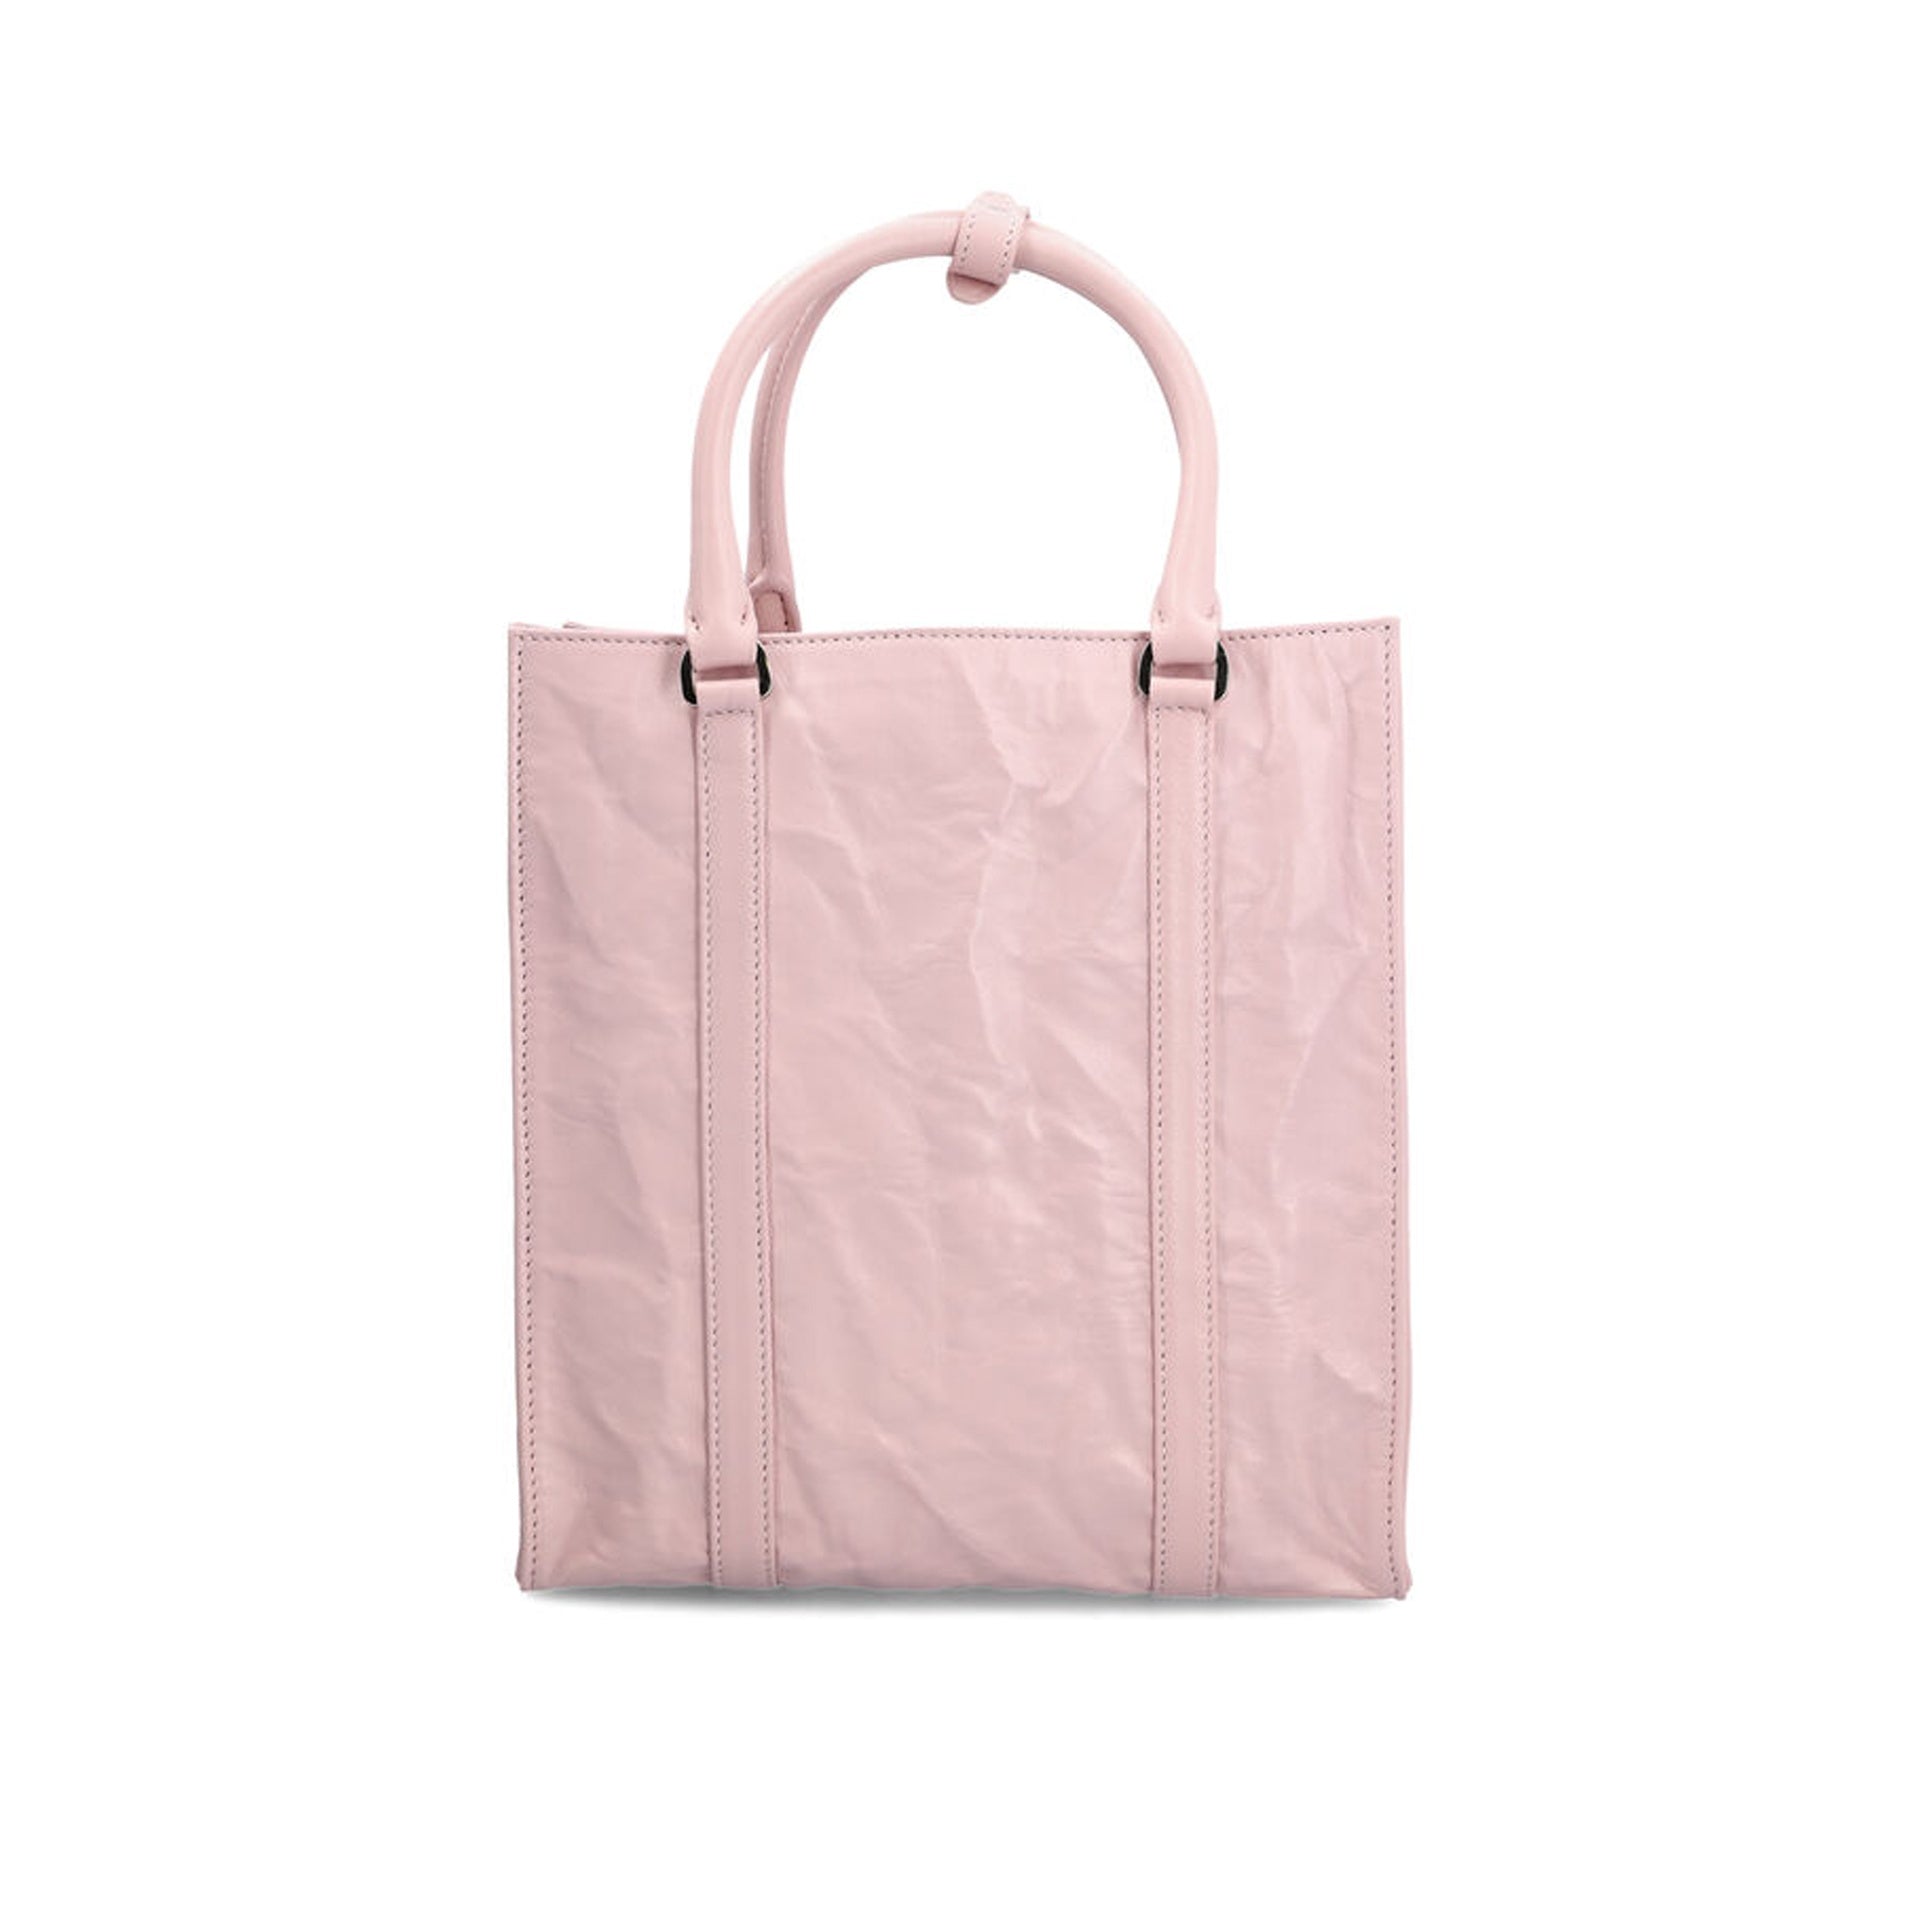 PRADA-Outlet-Sale-Prada Leather Handbag-WOMEN BAGS-PINK-UNI-ARCHIVIST